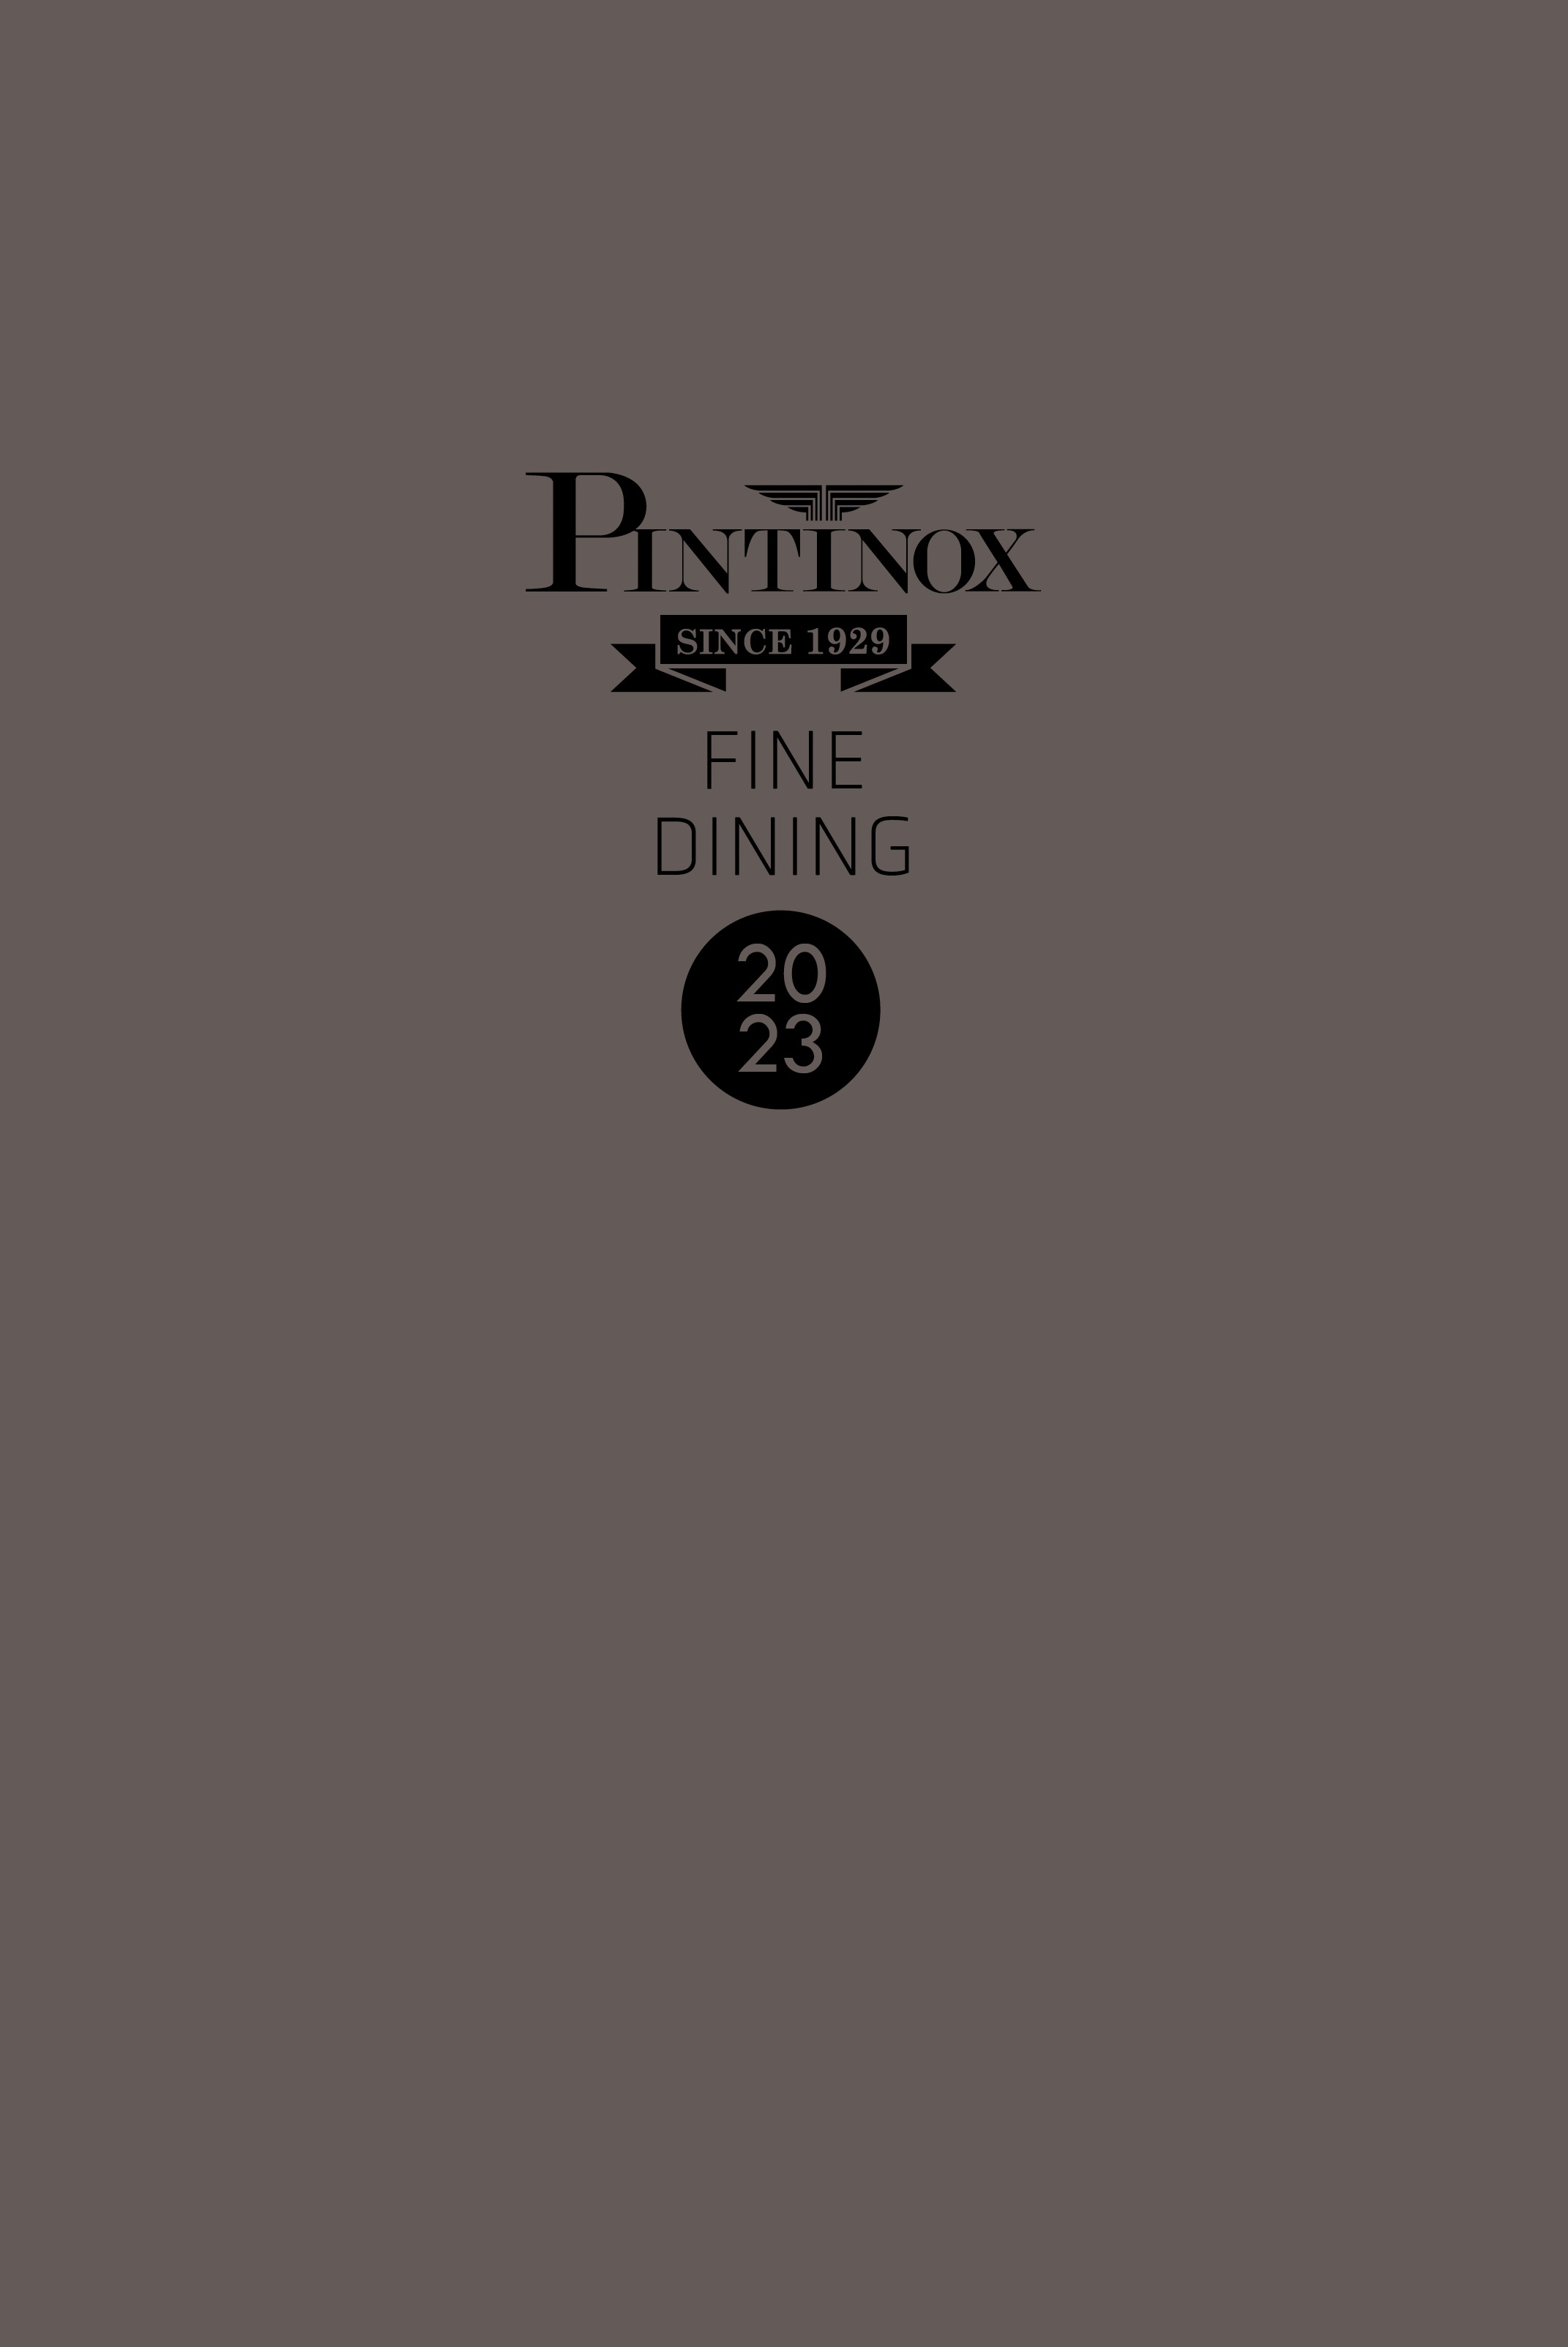 Pintinox HORECA Fine Dining Katalog PDF